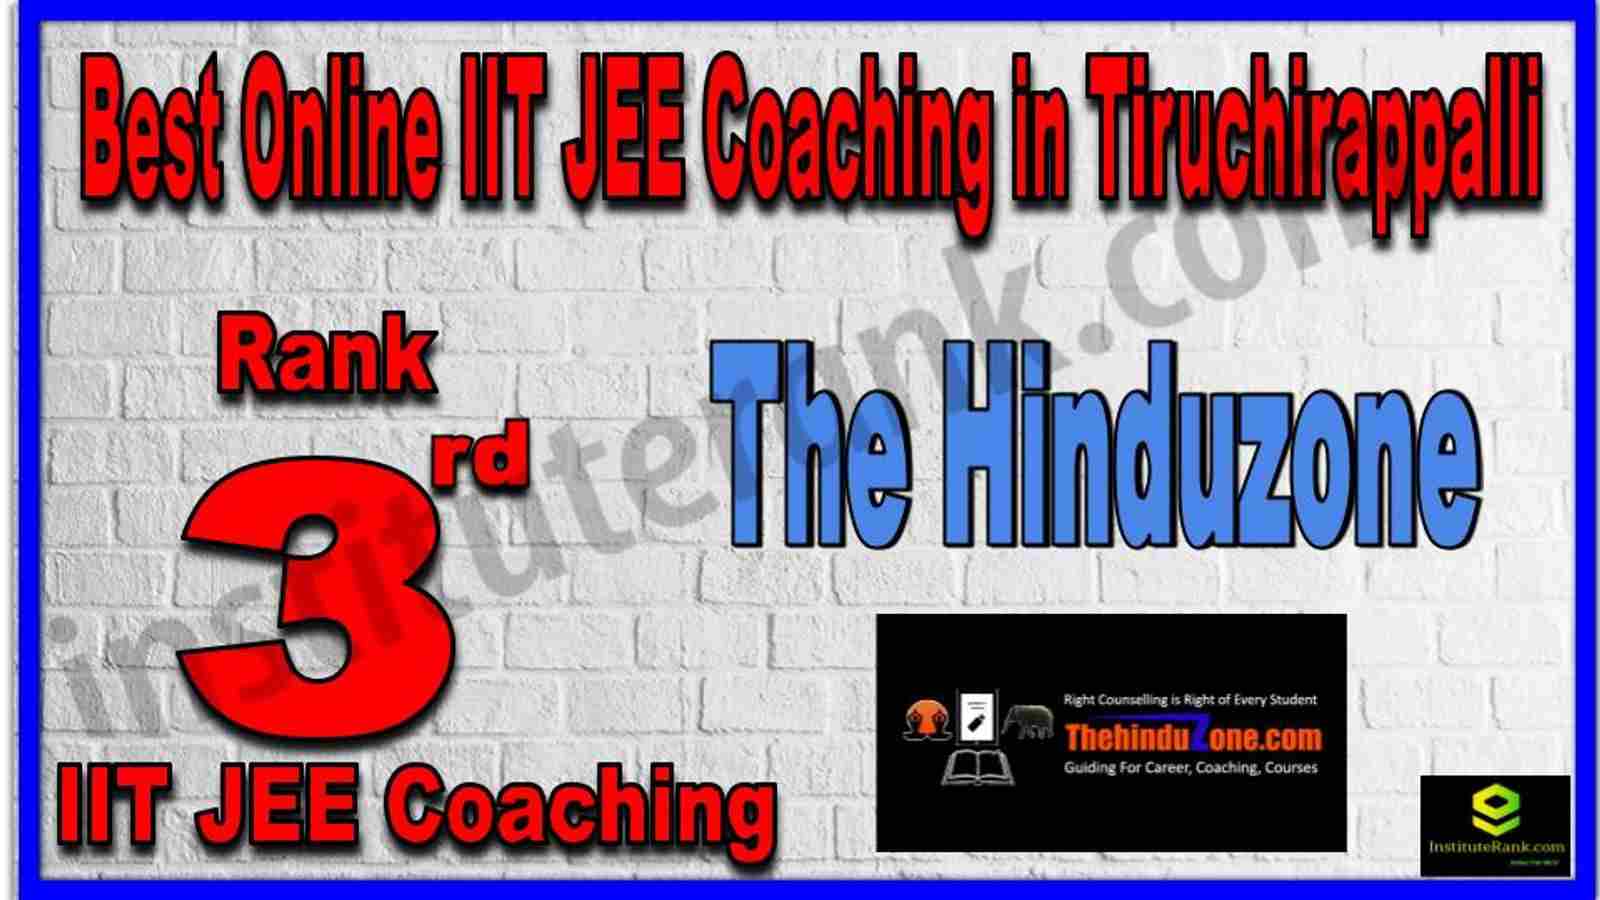 Rank 3rd Best Online IIT JEE Coaching in Tiruchirappalli